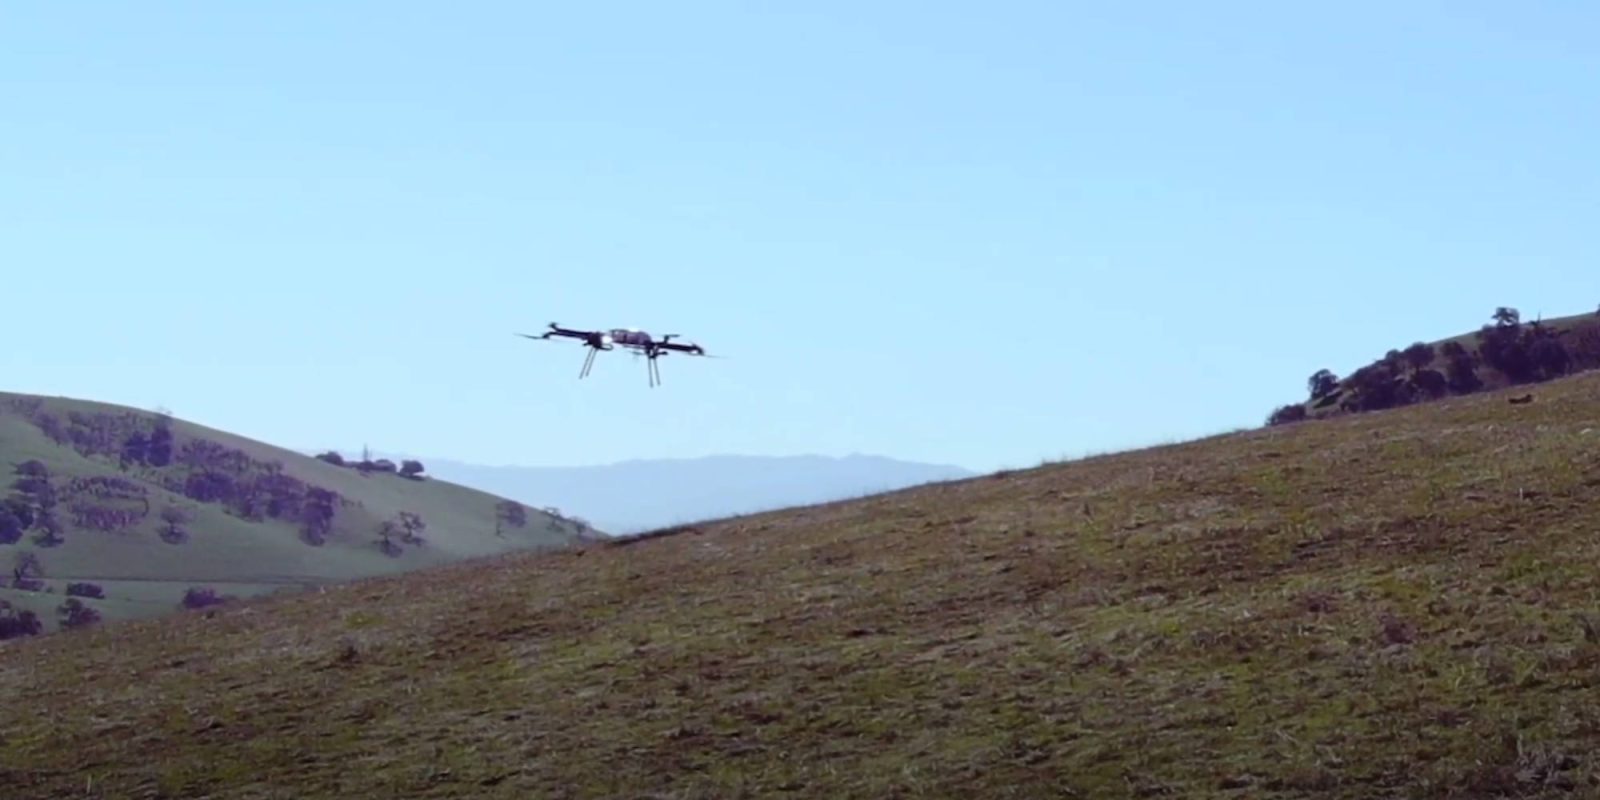 Skyfront drone endurance record